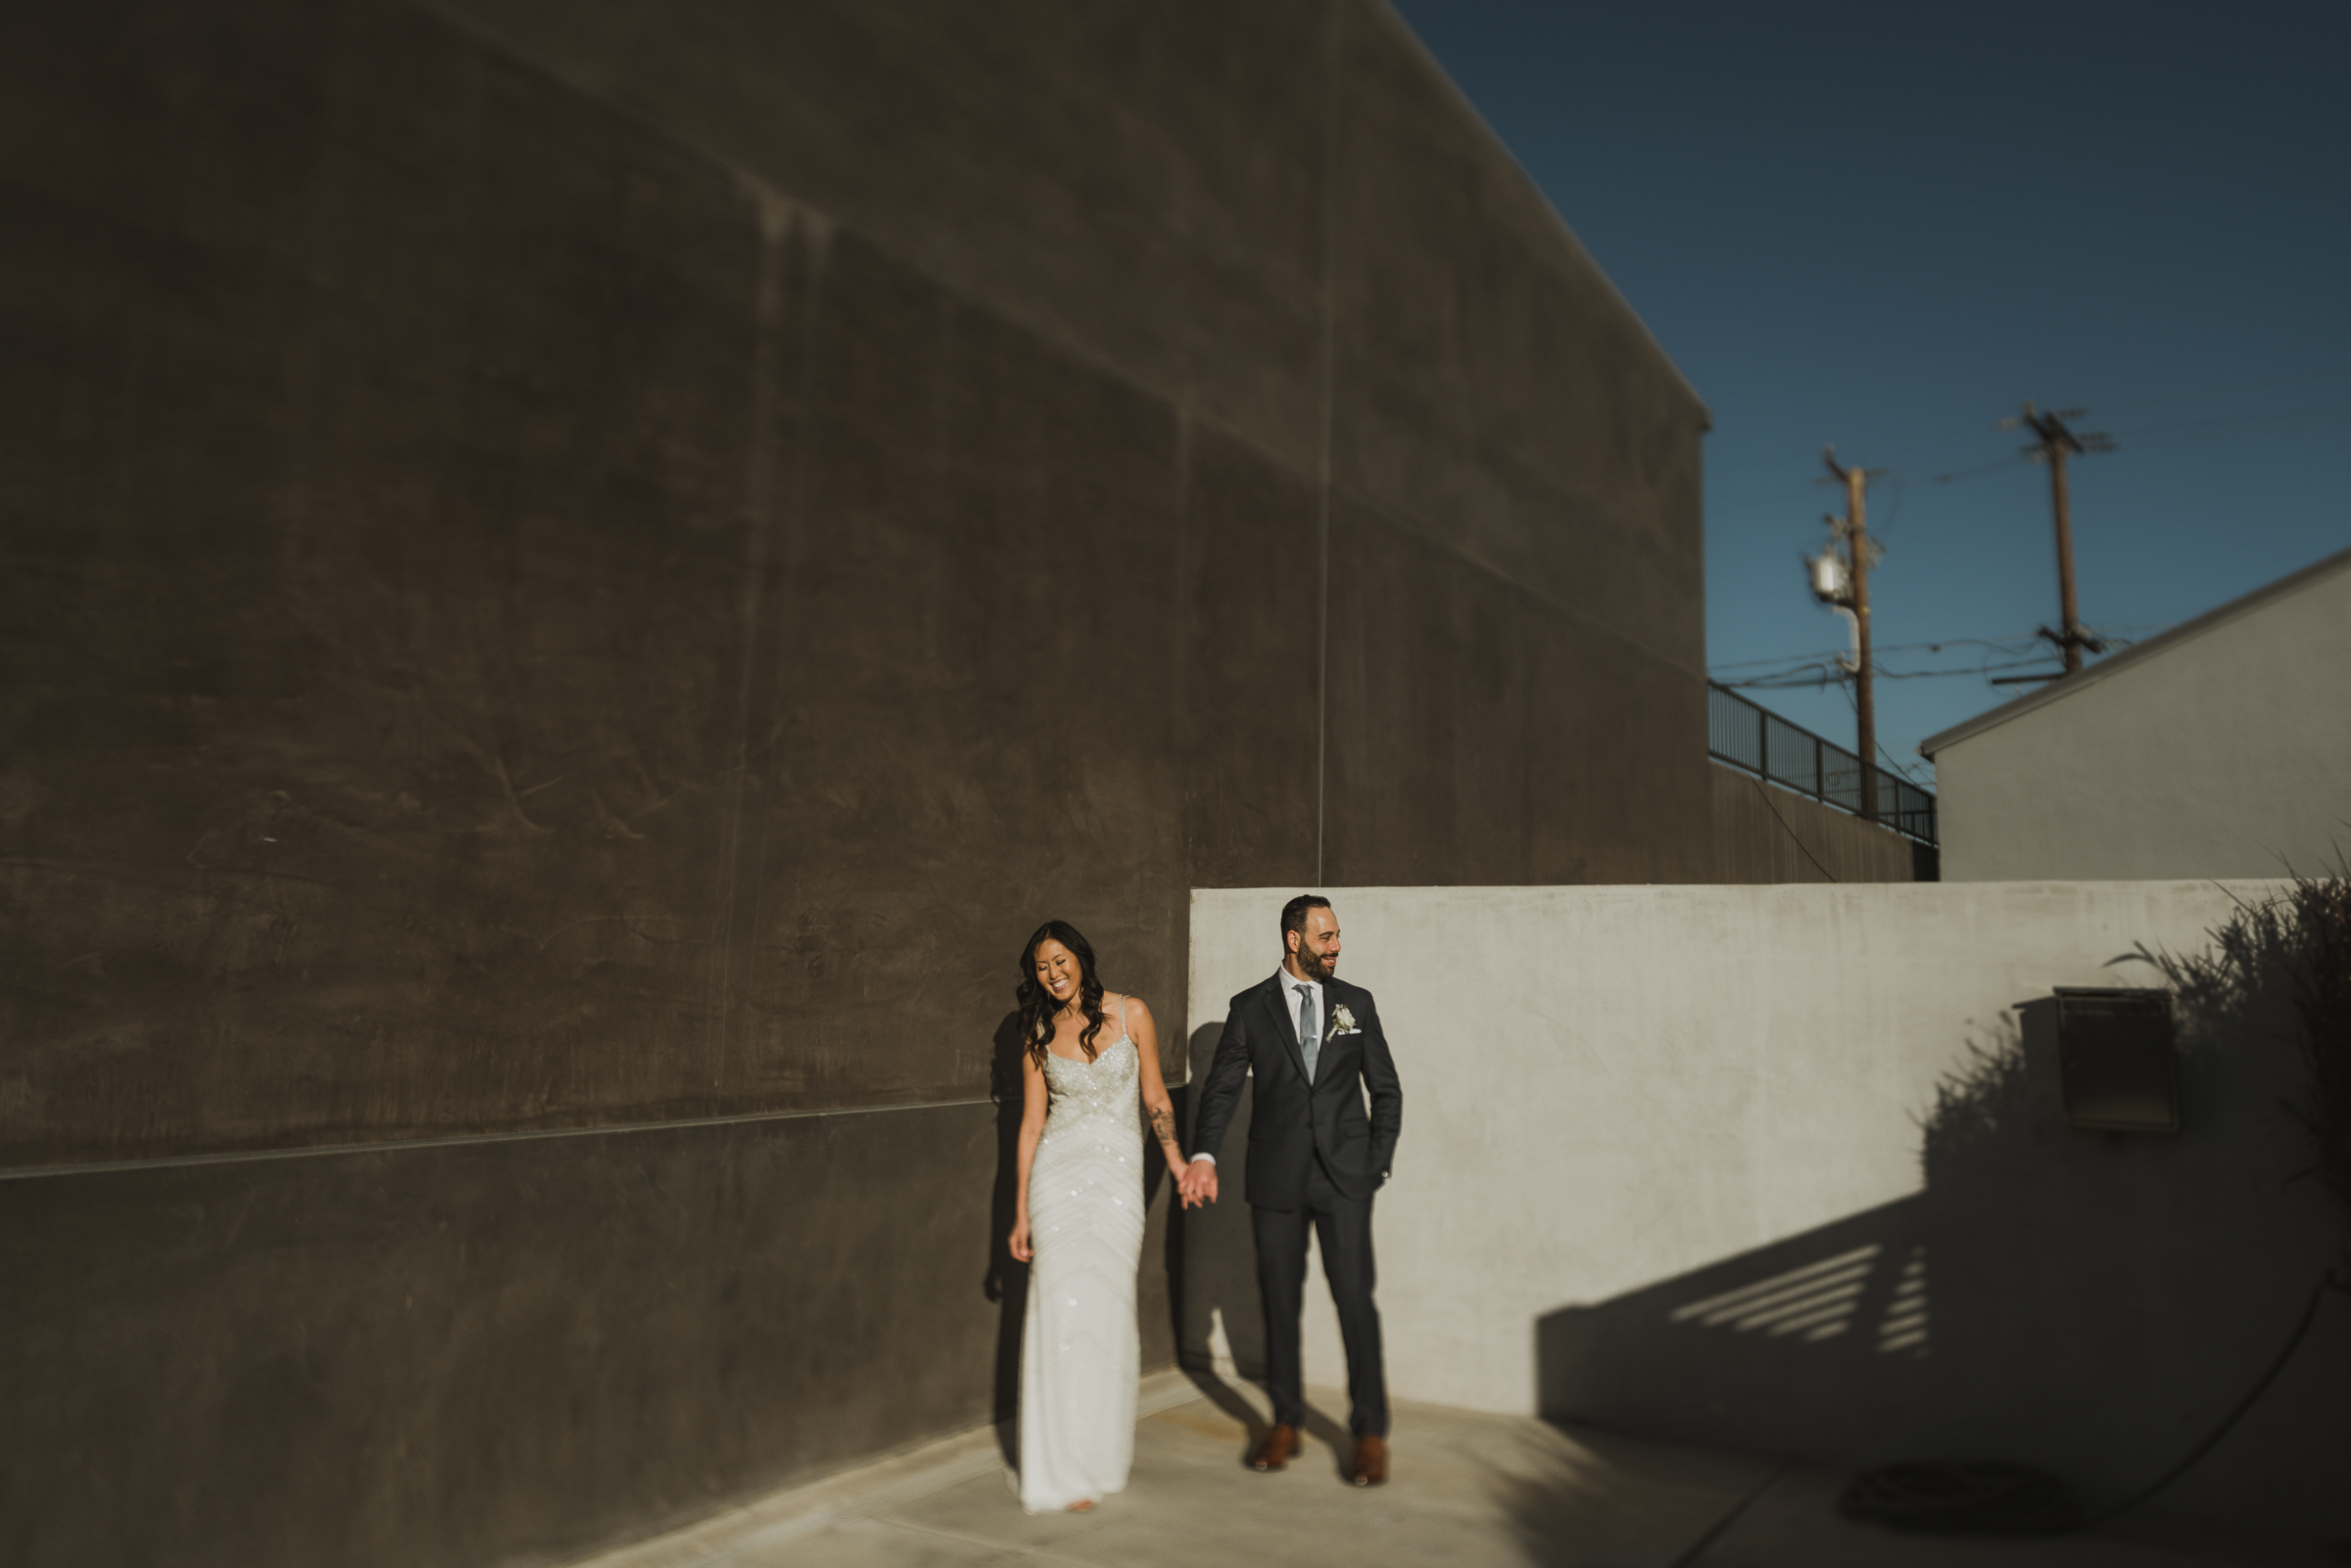 ©Isaiah + Taylor Photography - Big Door Studios Wedding, El Segundo, Los Angeles Wedding Photographer-41.jpg